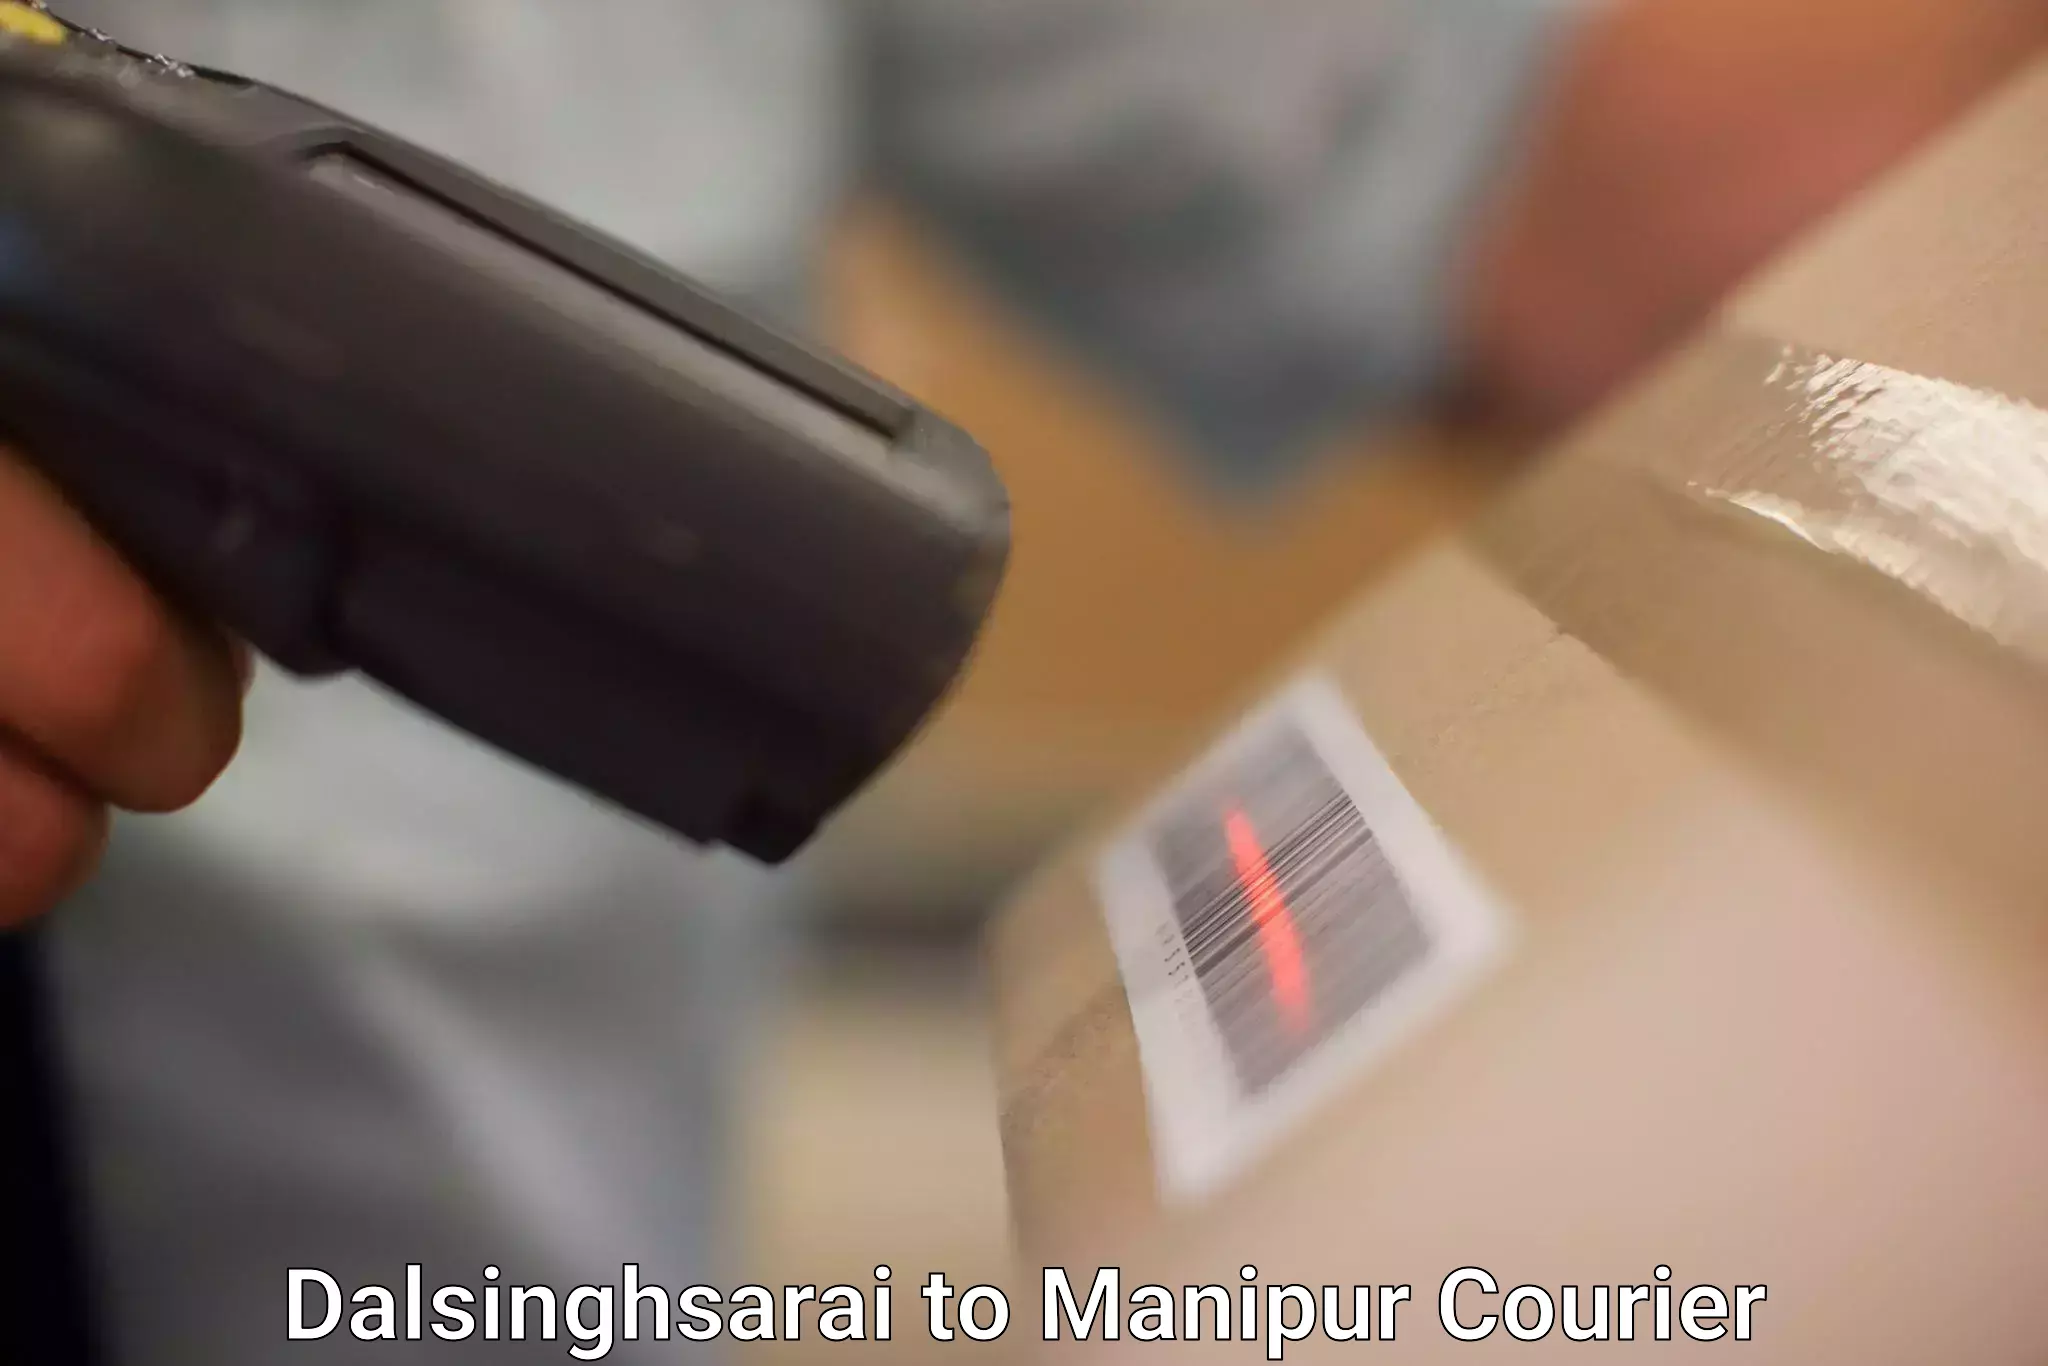 On-call courier service Dalsinghsarai to Churachandpur